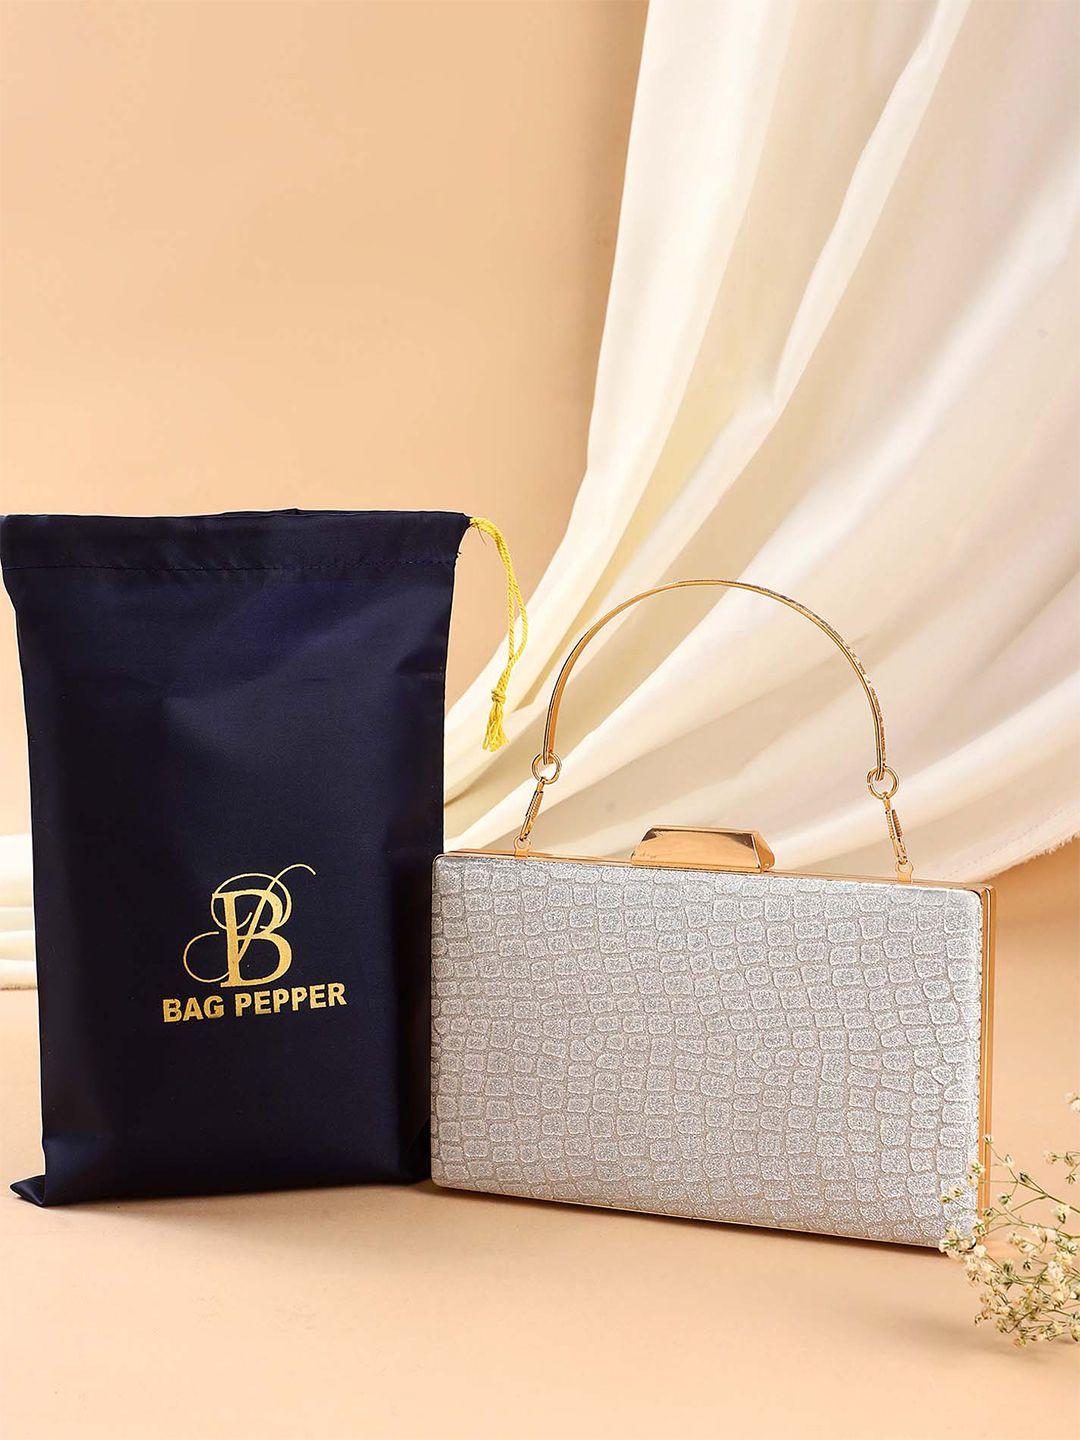 bag pepper grey & gold-toned textured box clutch